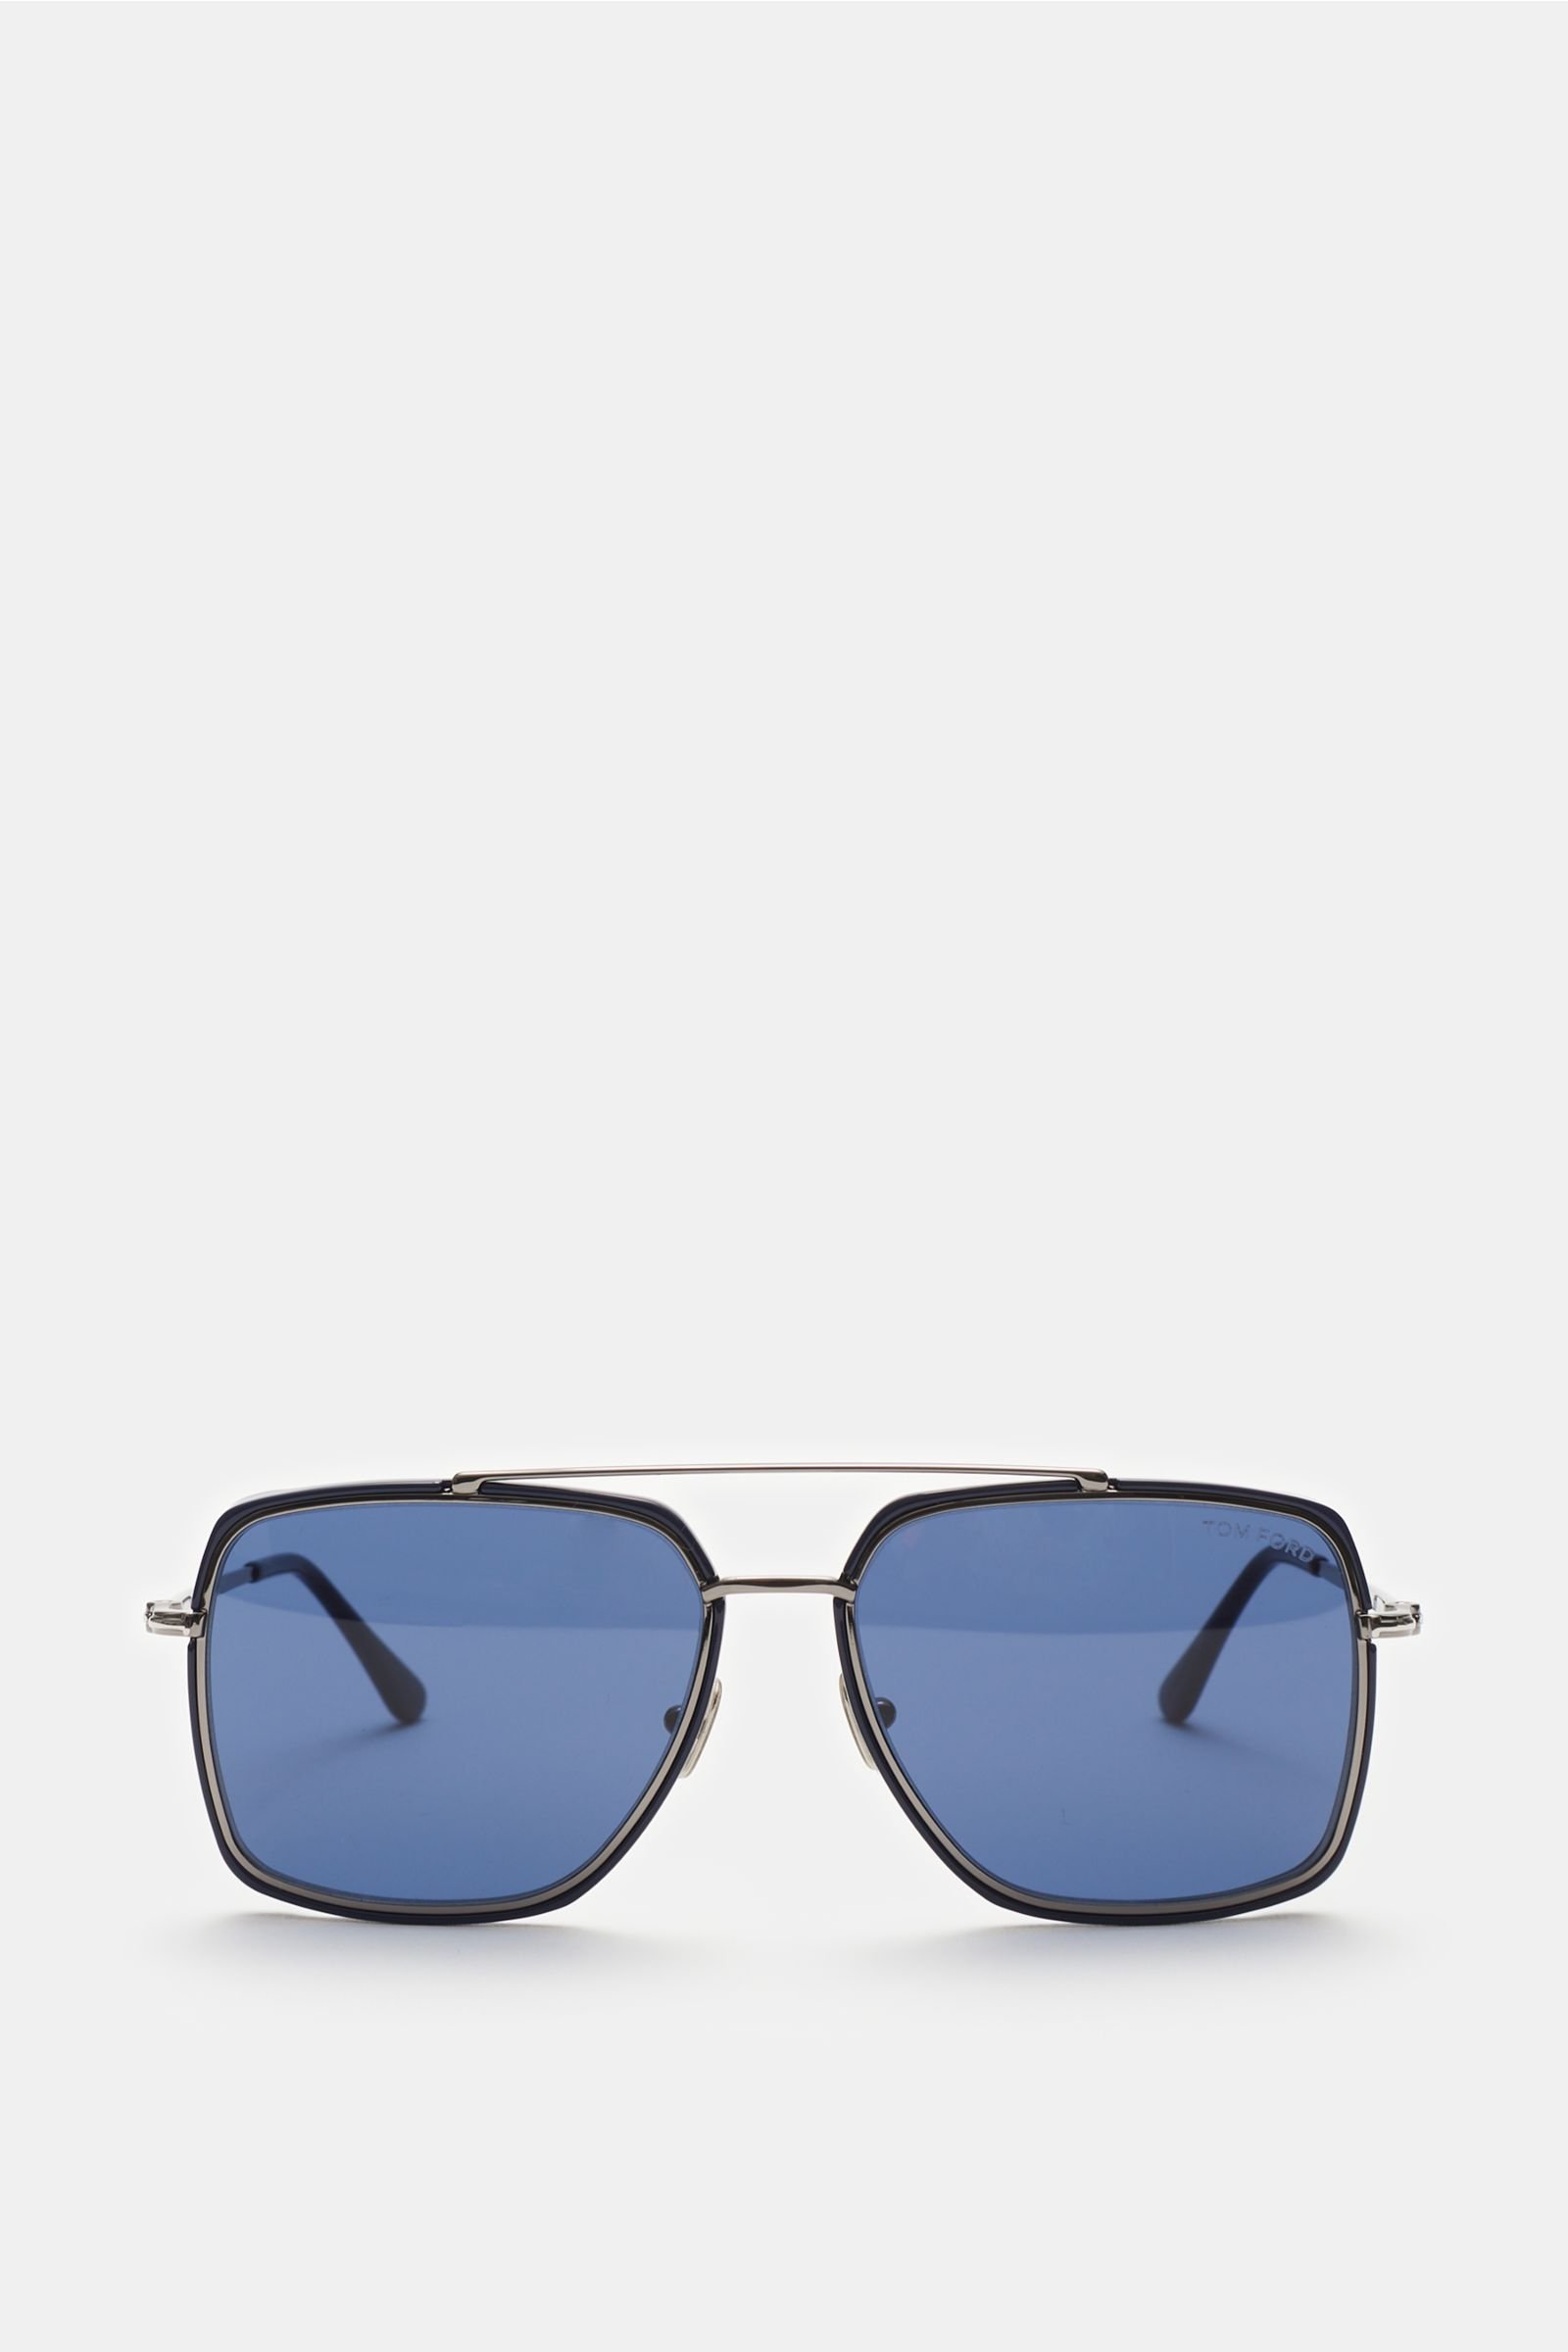 Sunglasses 'Lionel' silver/navy